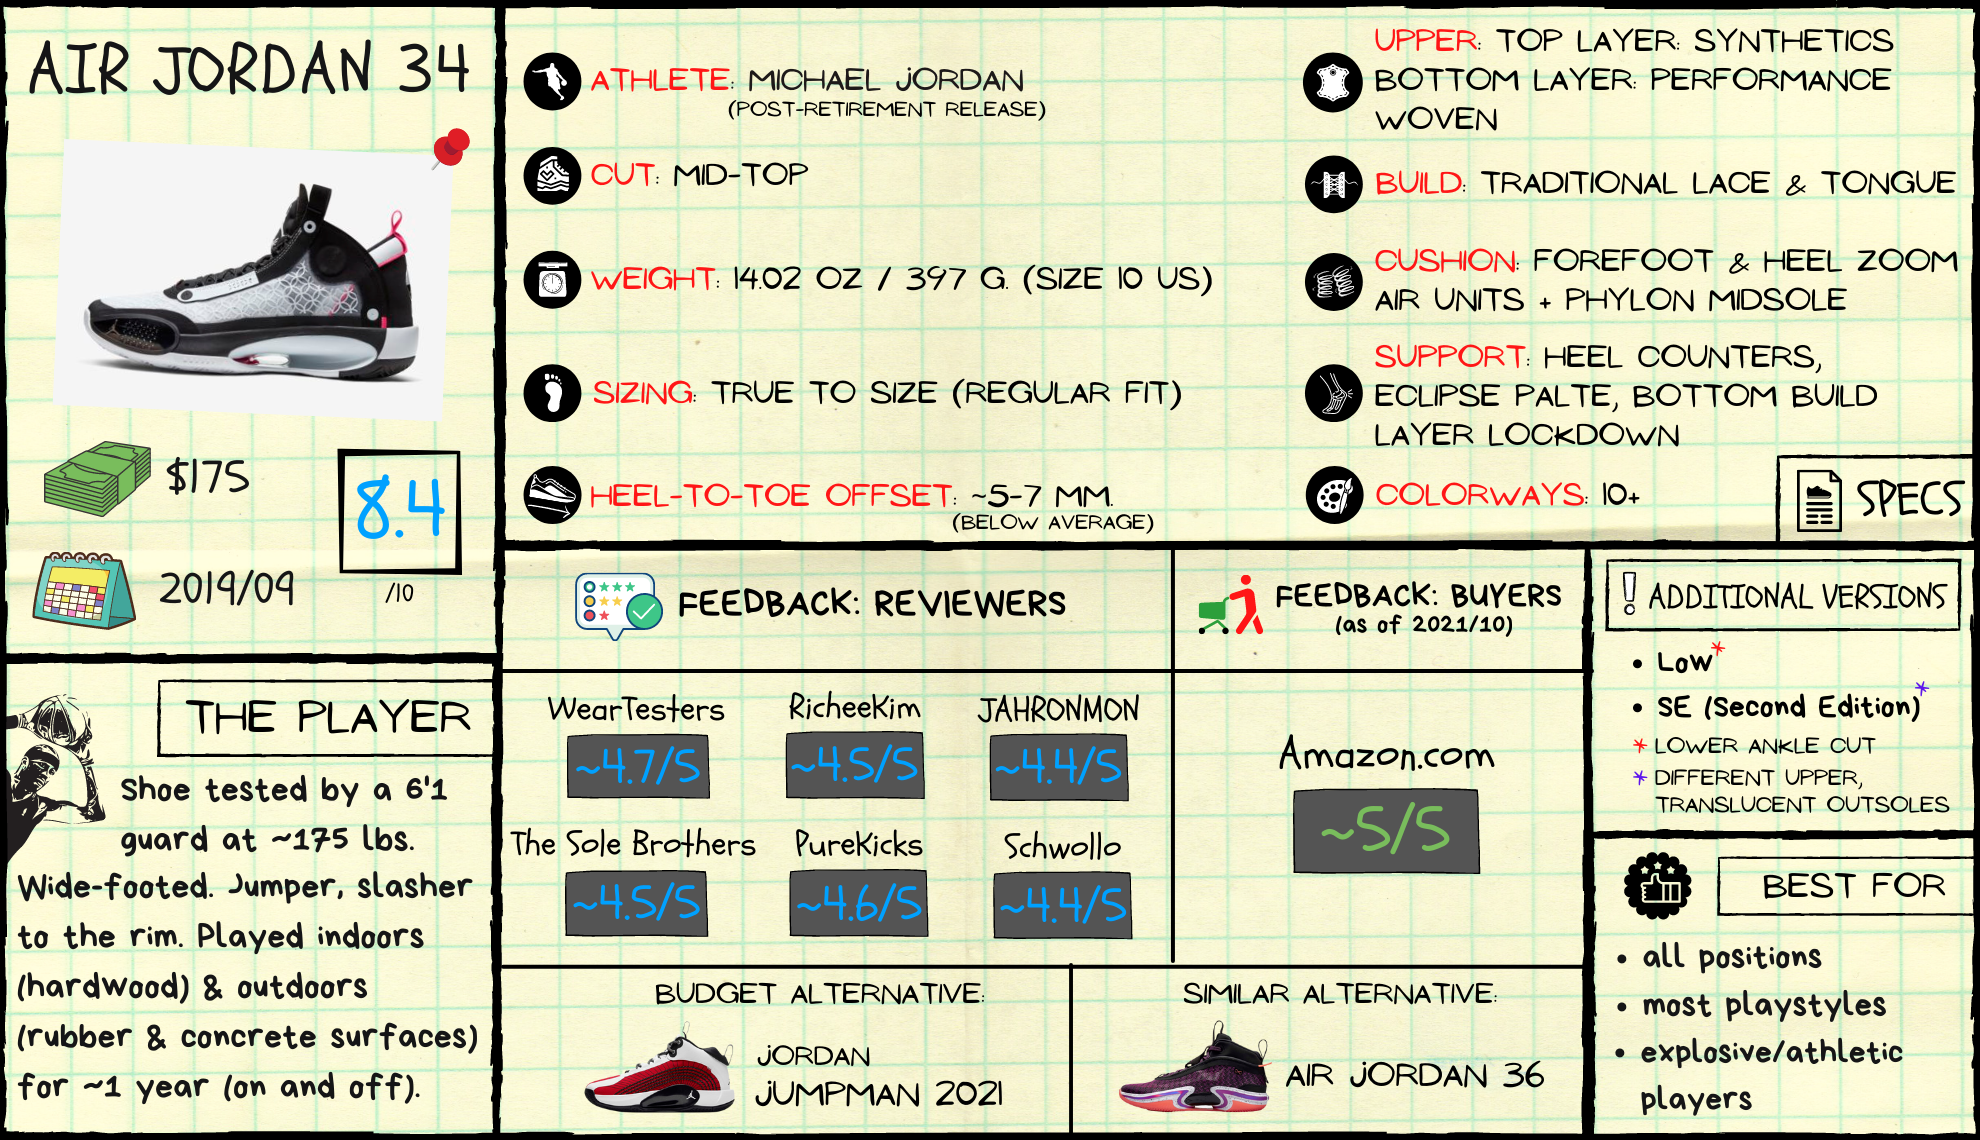 Air Jordan 34 Review: Spec Sheet